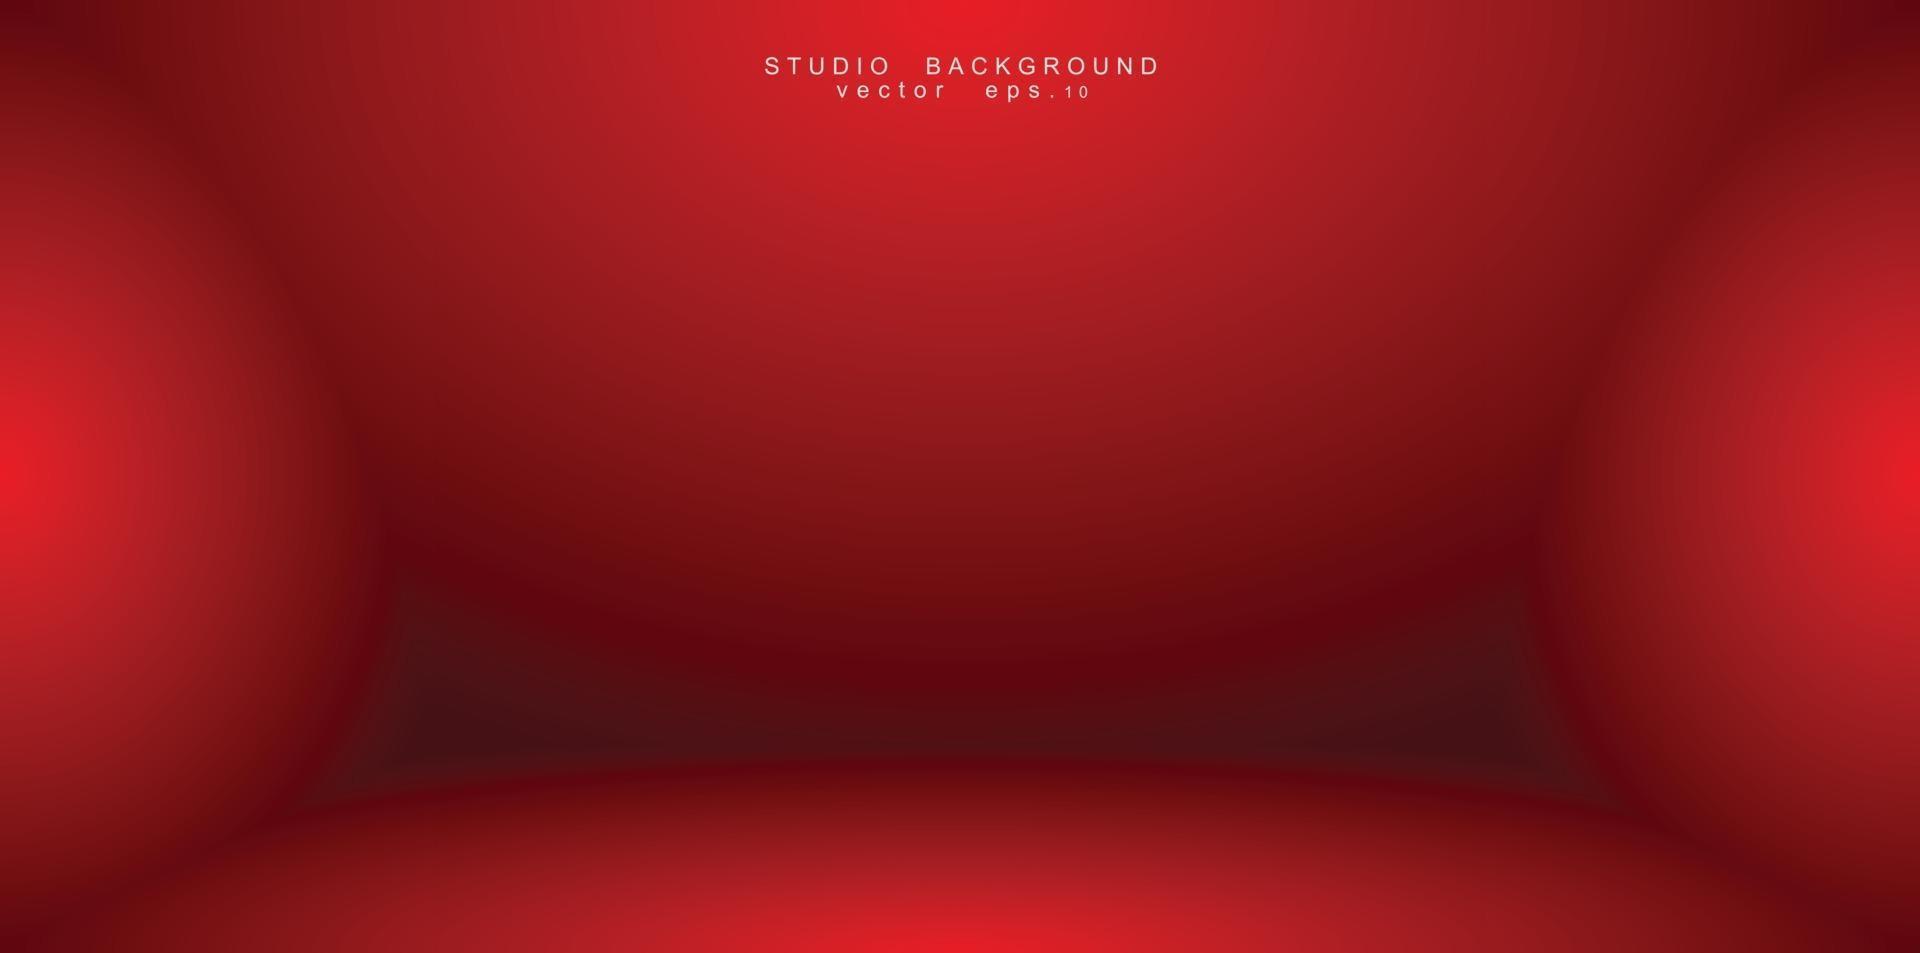 lege rode kleur studio kamer achtergrond vector